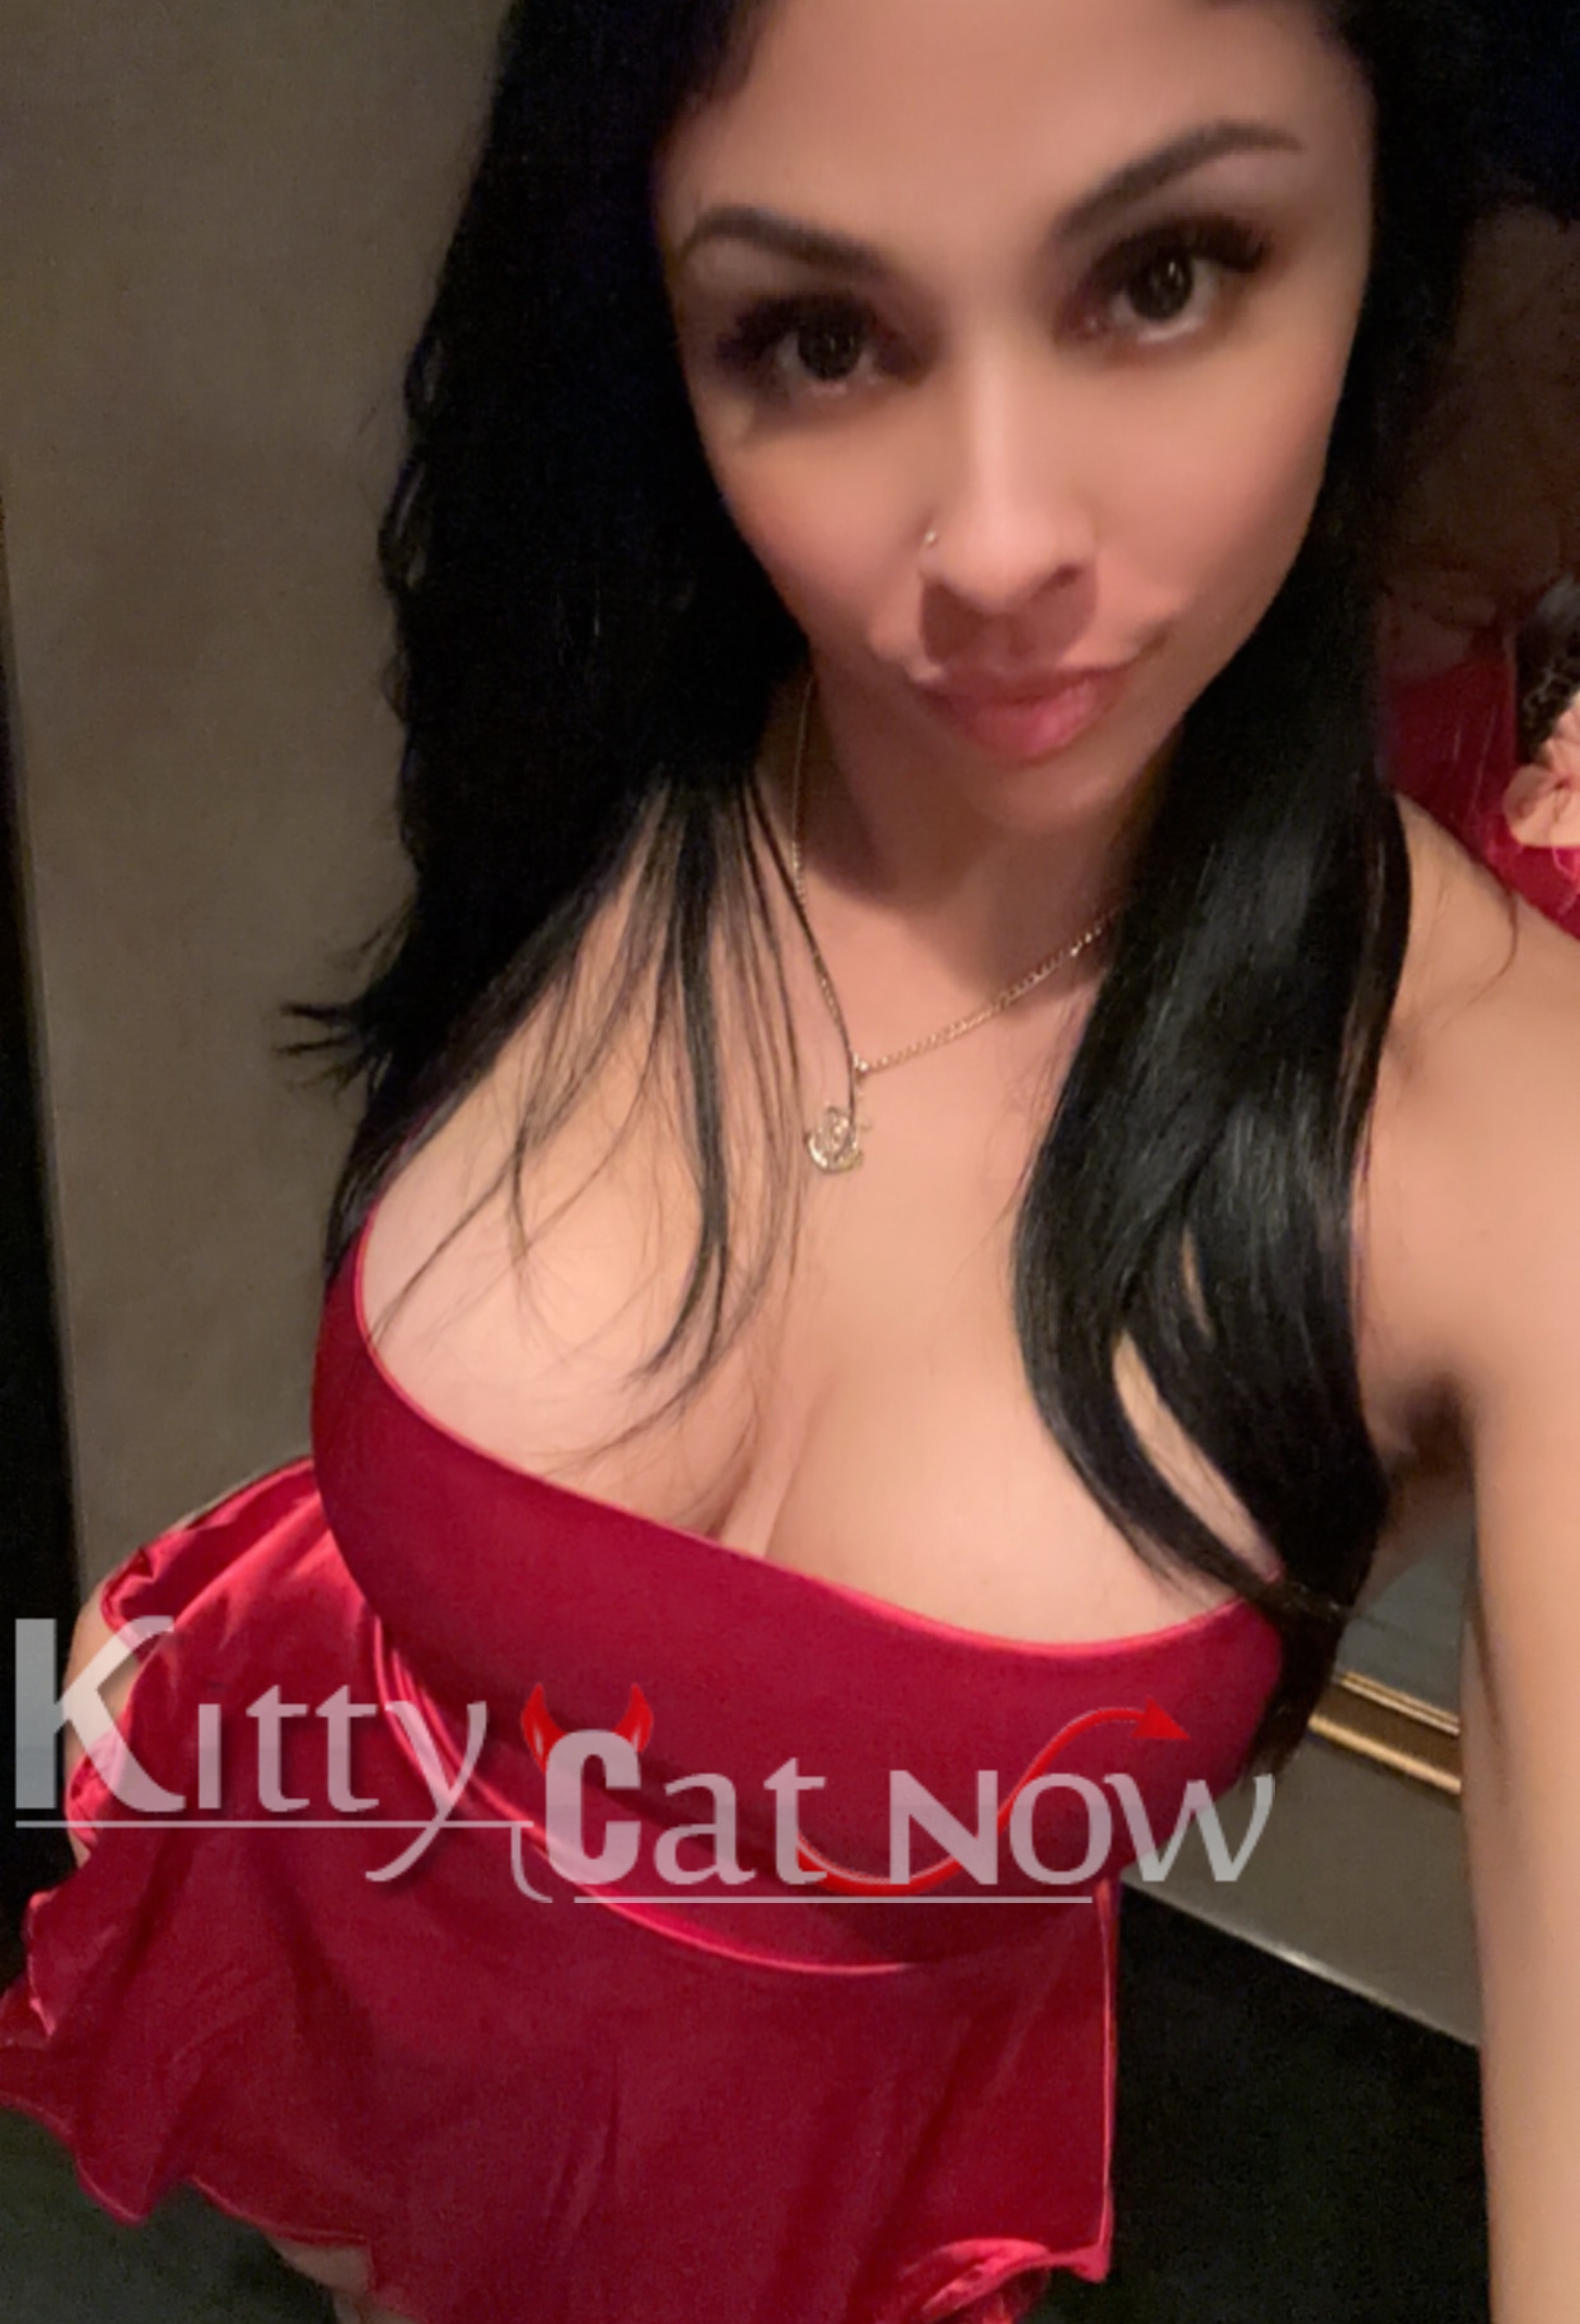 Kitty Cat Now Chicago-Lana